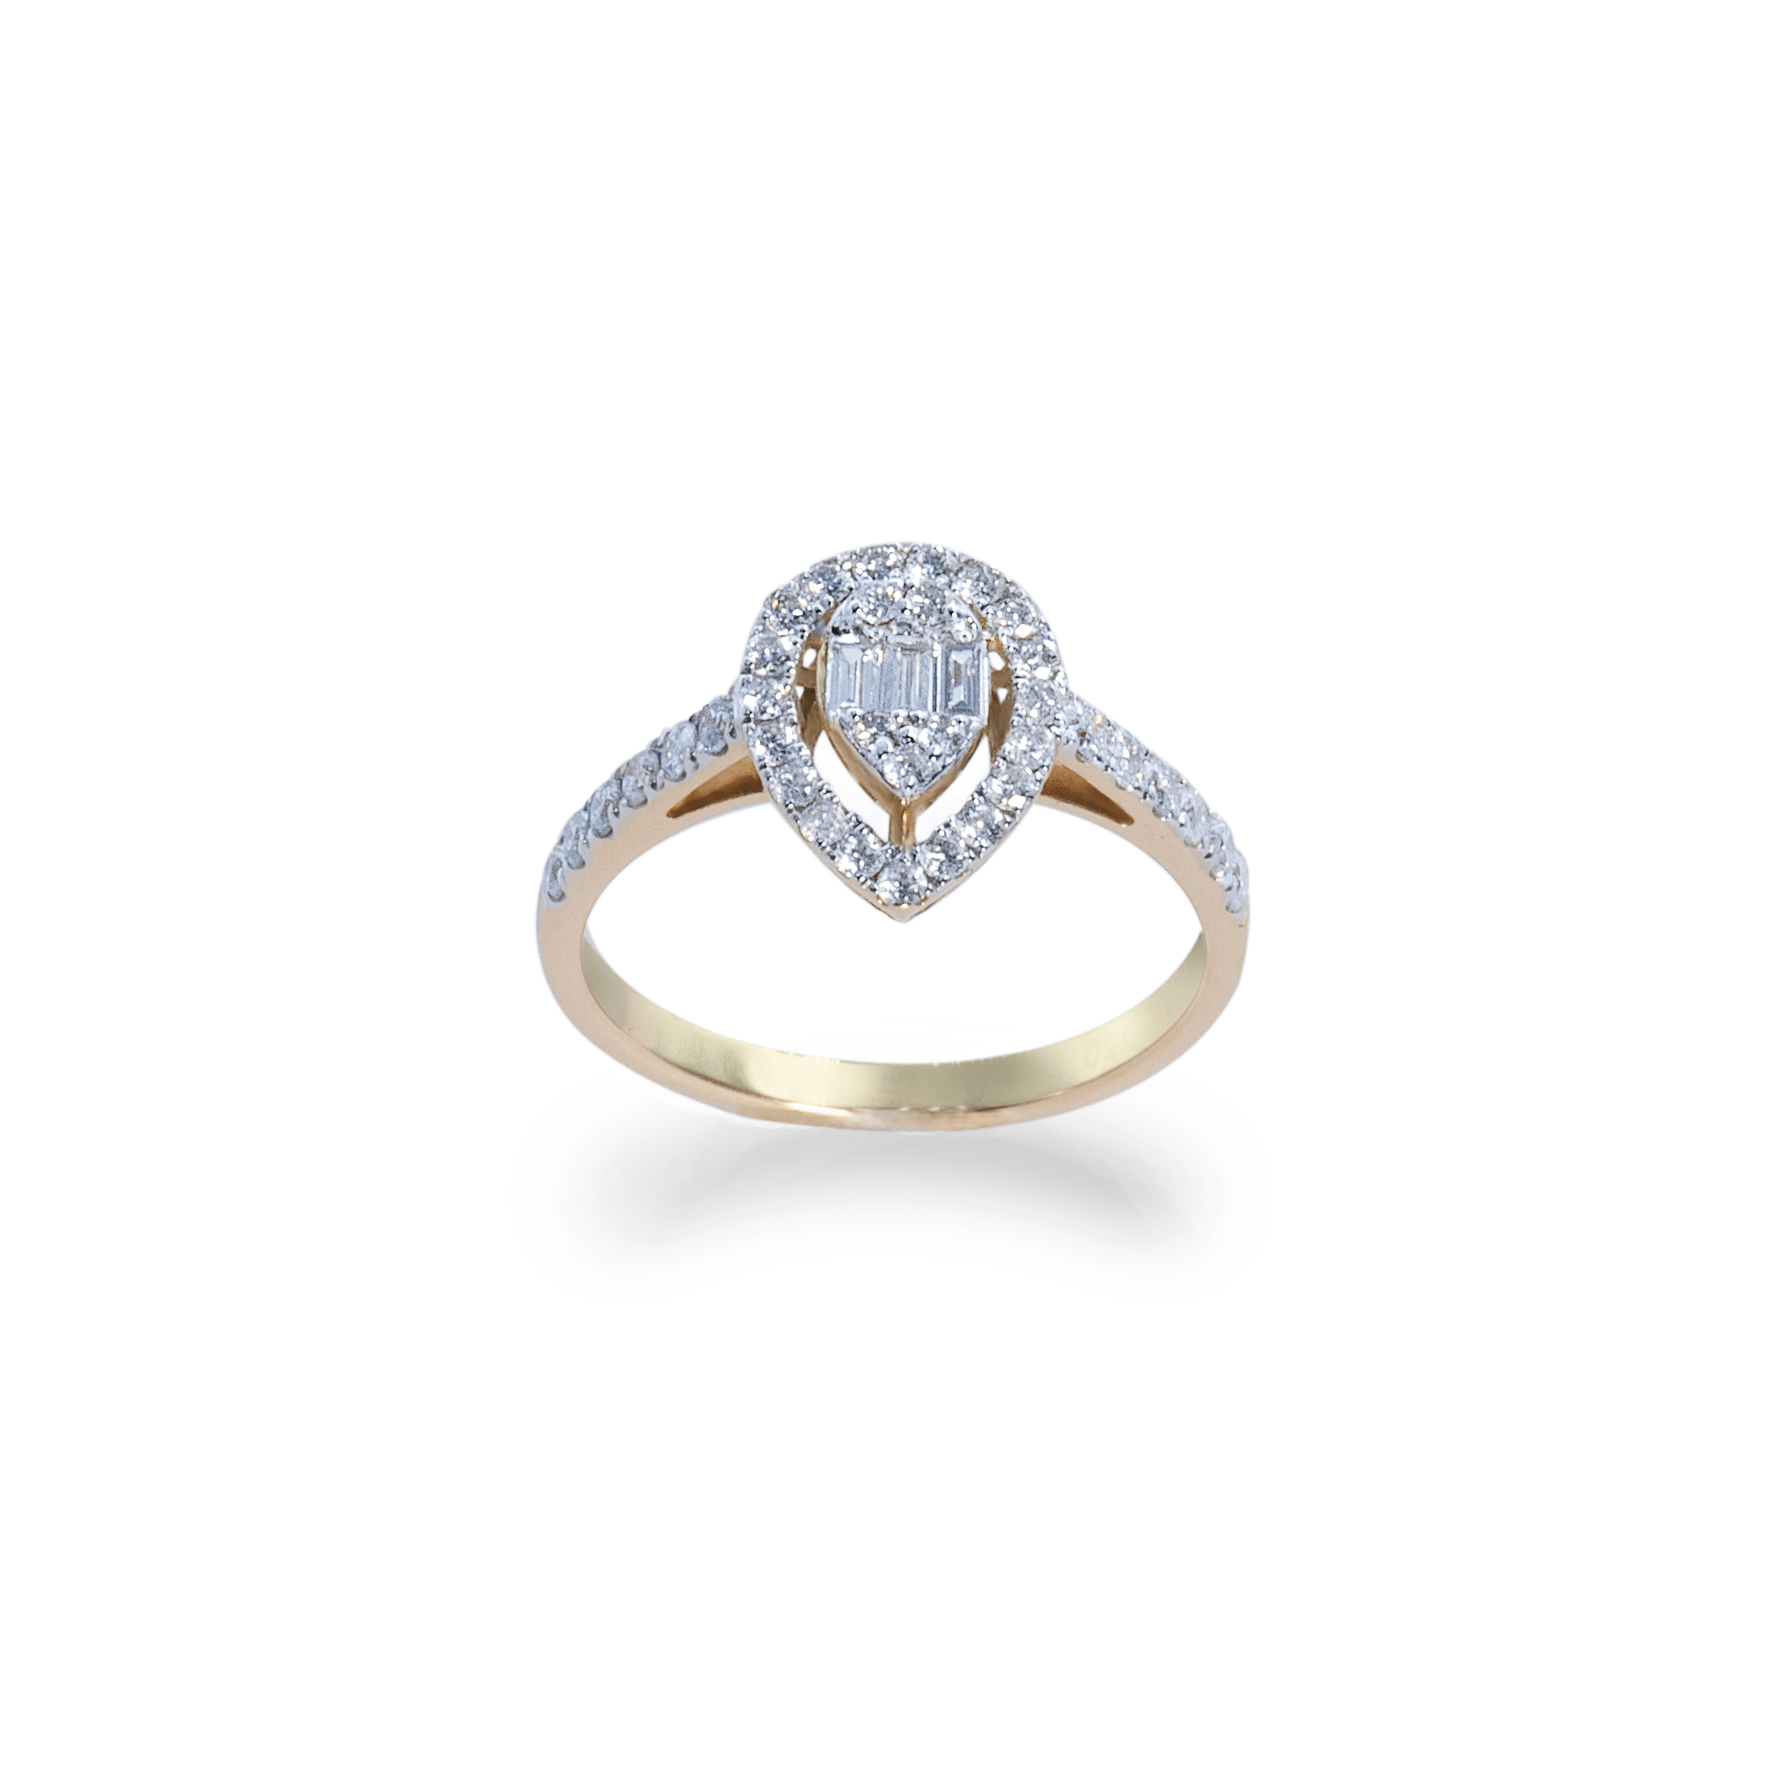 engagement wedding ring, big diamond rings| Alibaba.com